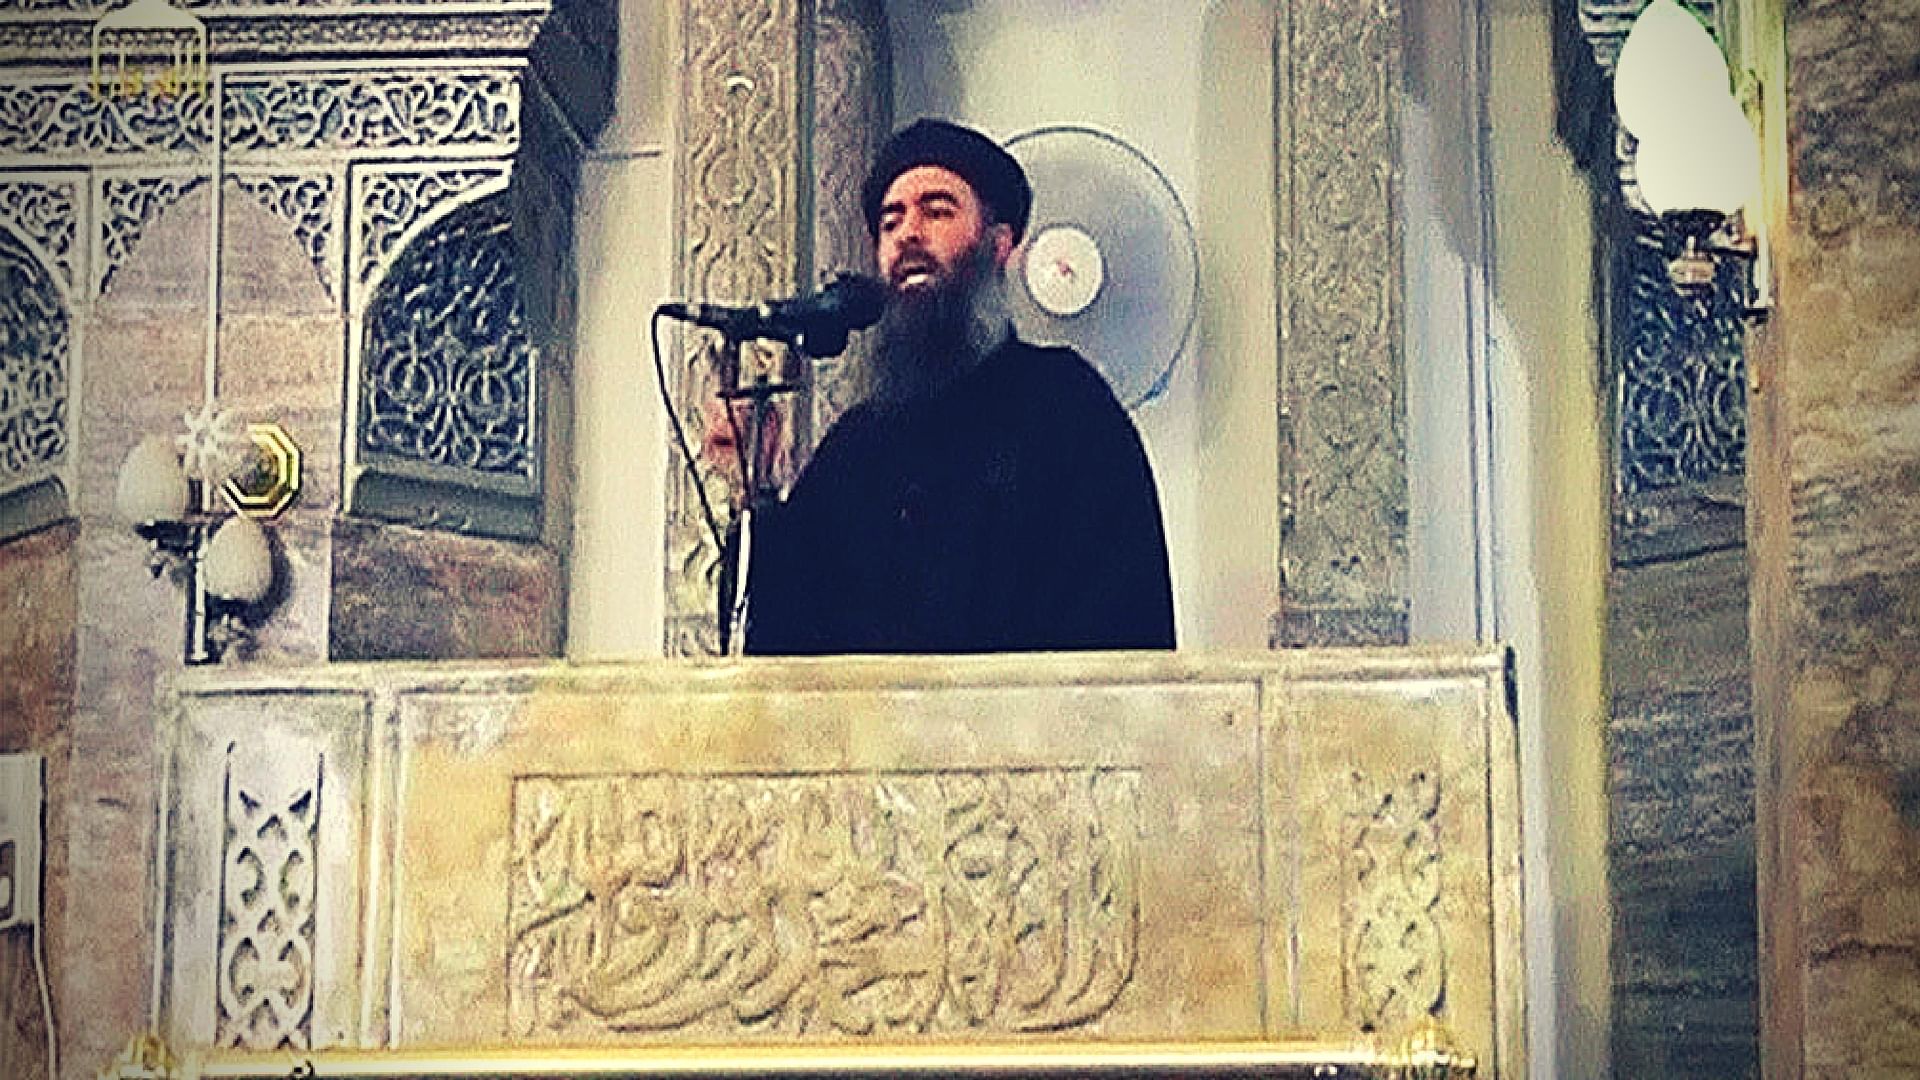 Abu Bakr al-Baghdadi, the chief of ISIS delivering a sermon in 2014. 